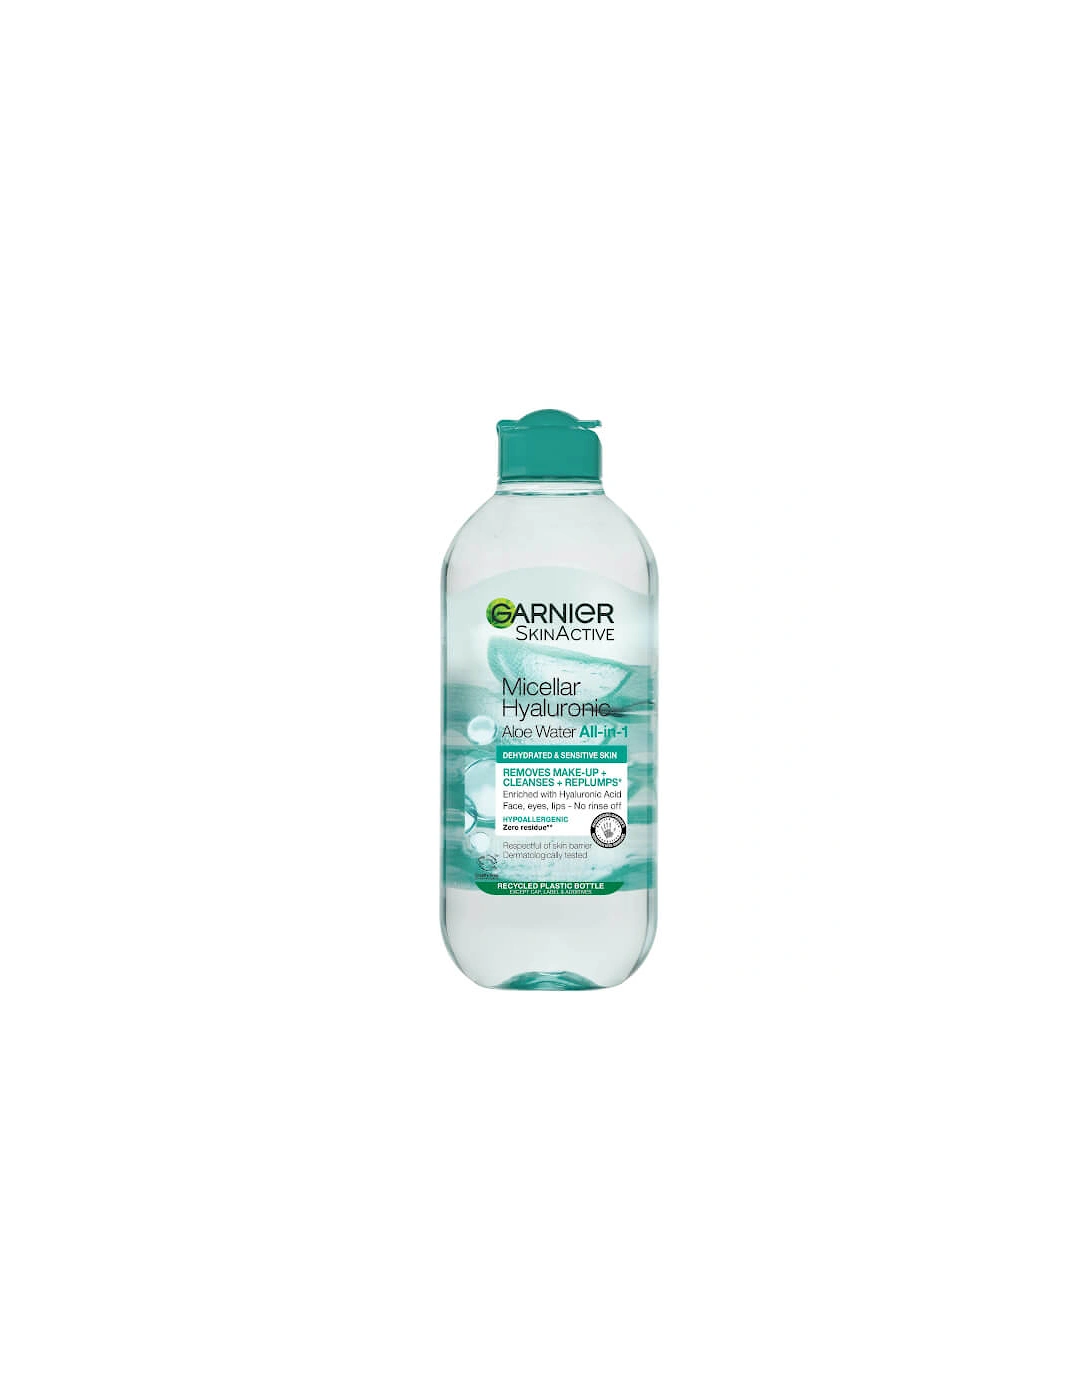 Micellar Hyaluronic Aloe Water 400ml, Cleanse and Replump - Garnier, 2 of 1